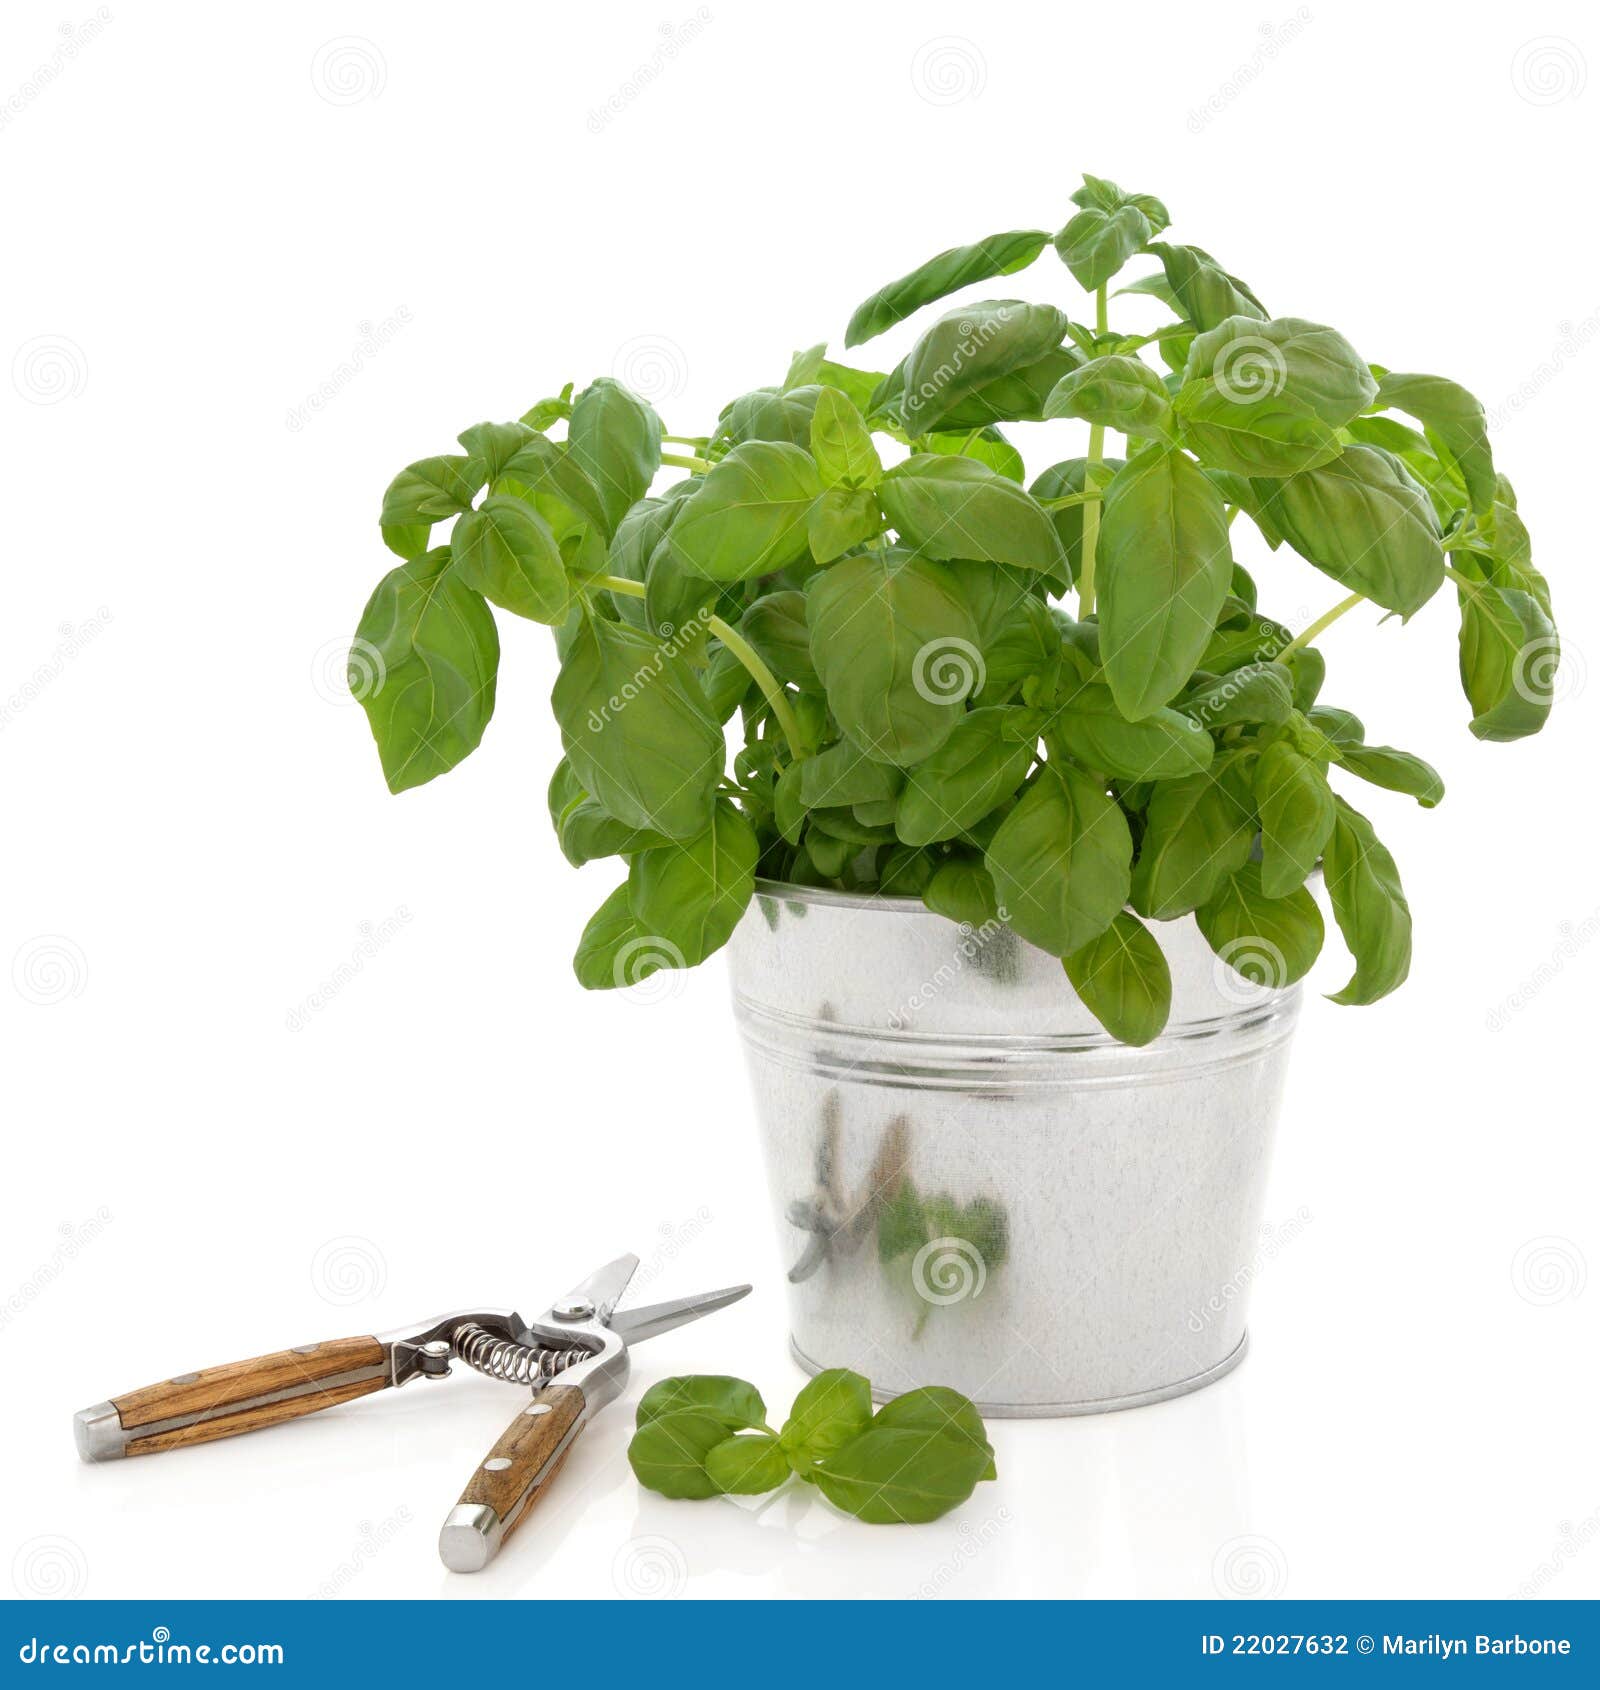 basil herb and secateurs